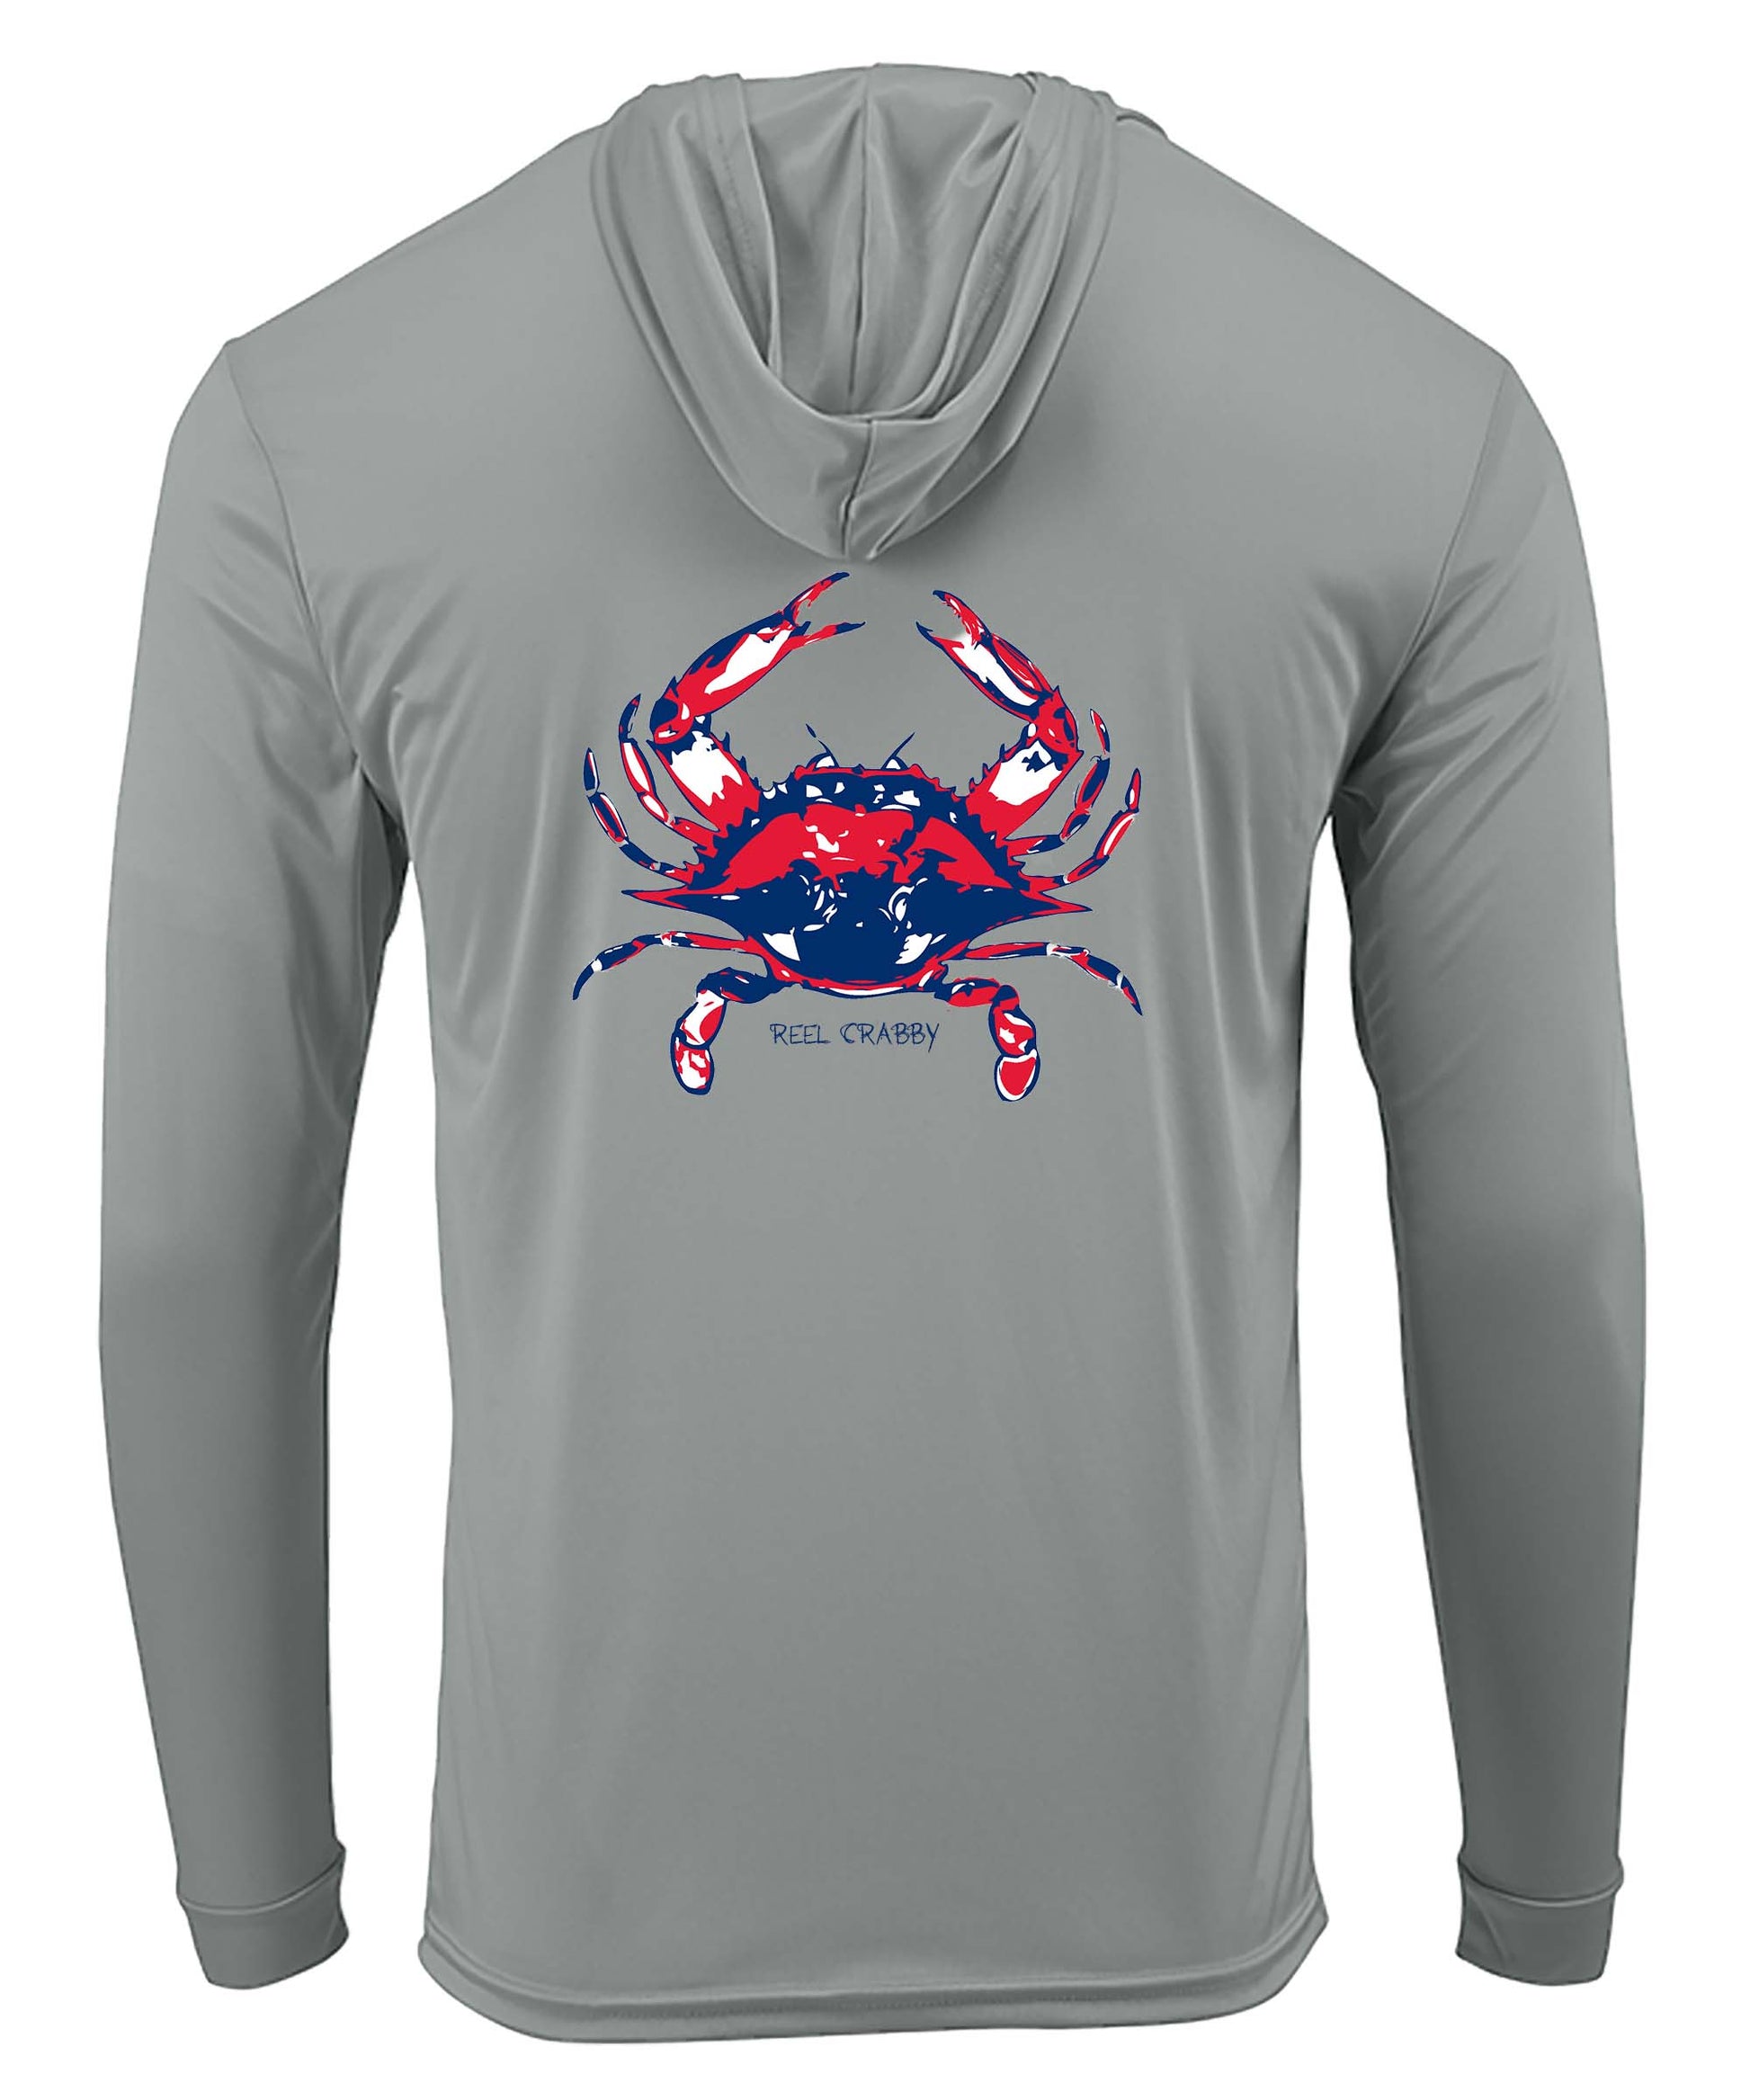 Reel Fishy Performance Hoodies 50+uv -Multiple Design Choices! S / Crab Med Gray Hoodie L/S - unisex